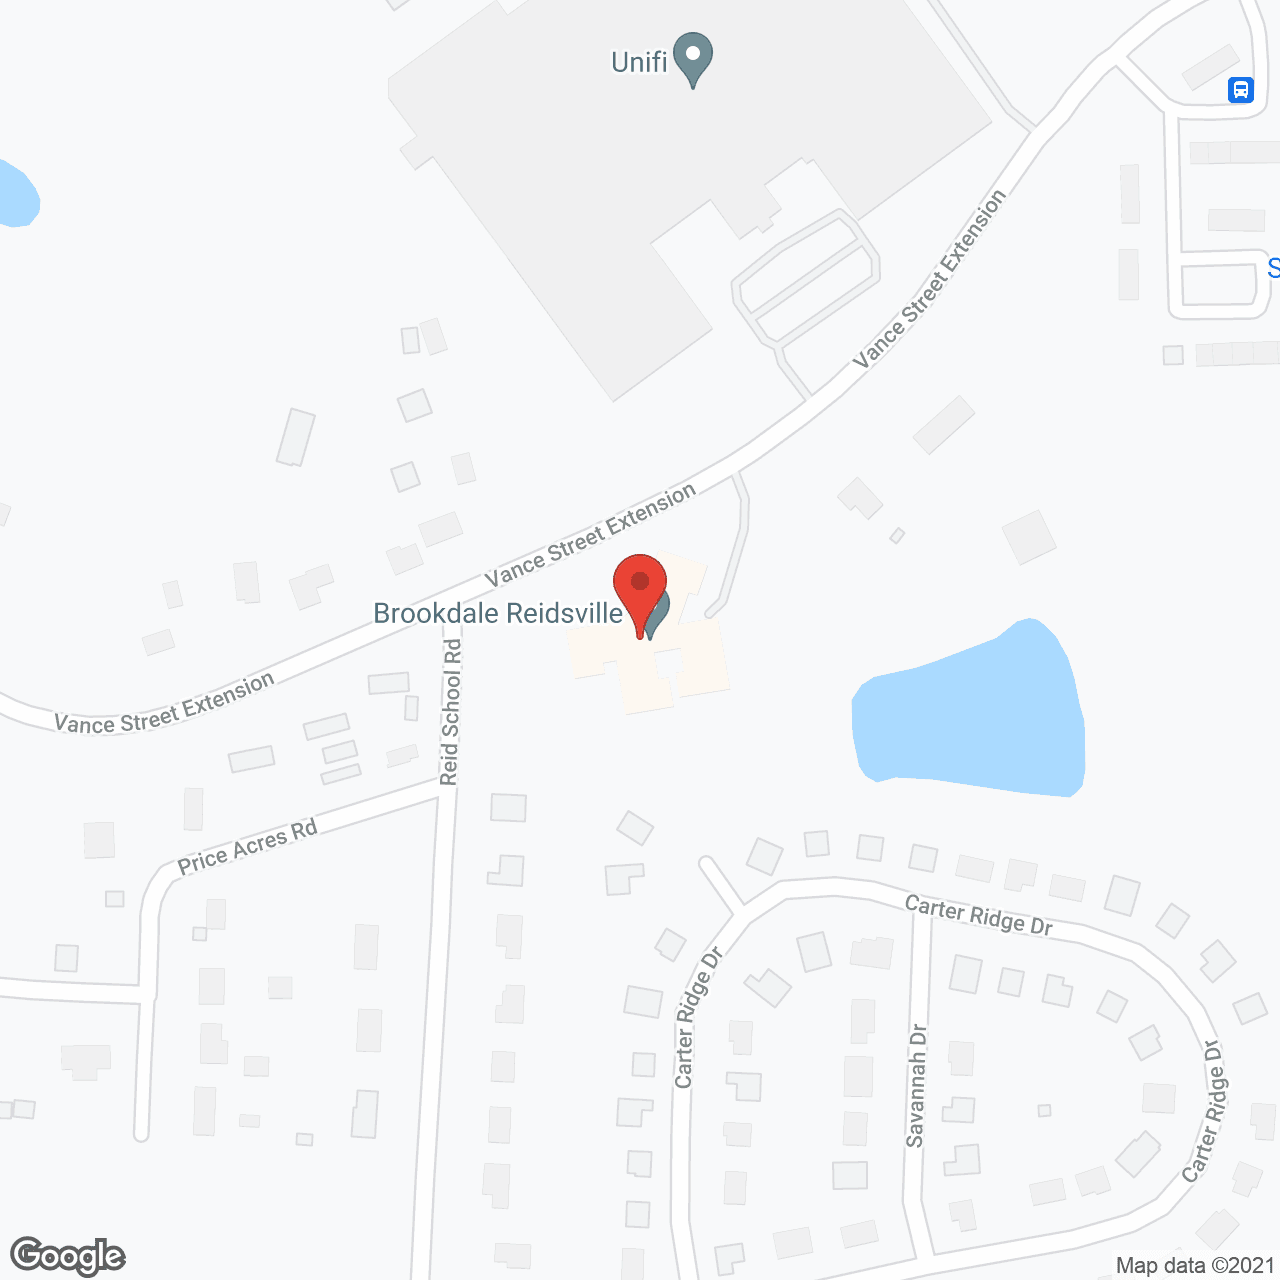 Brookdale Reidsville in google map